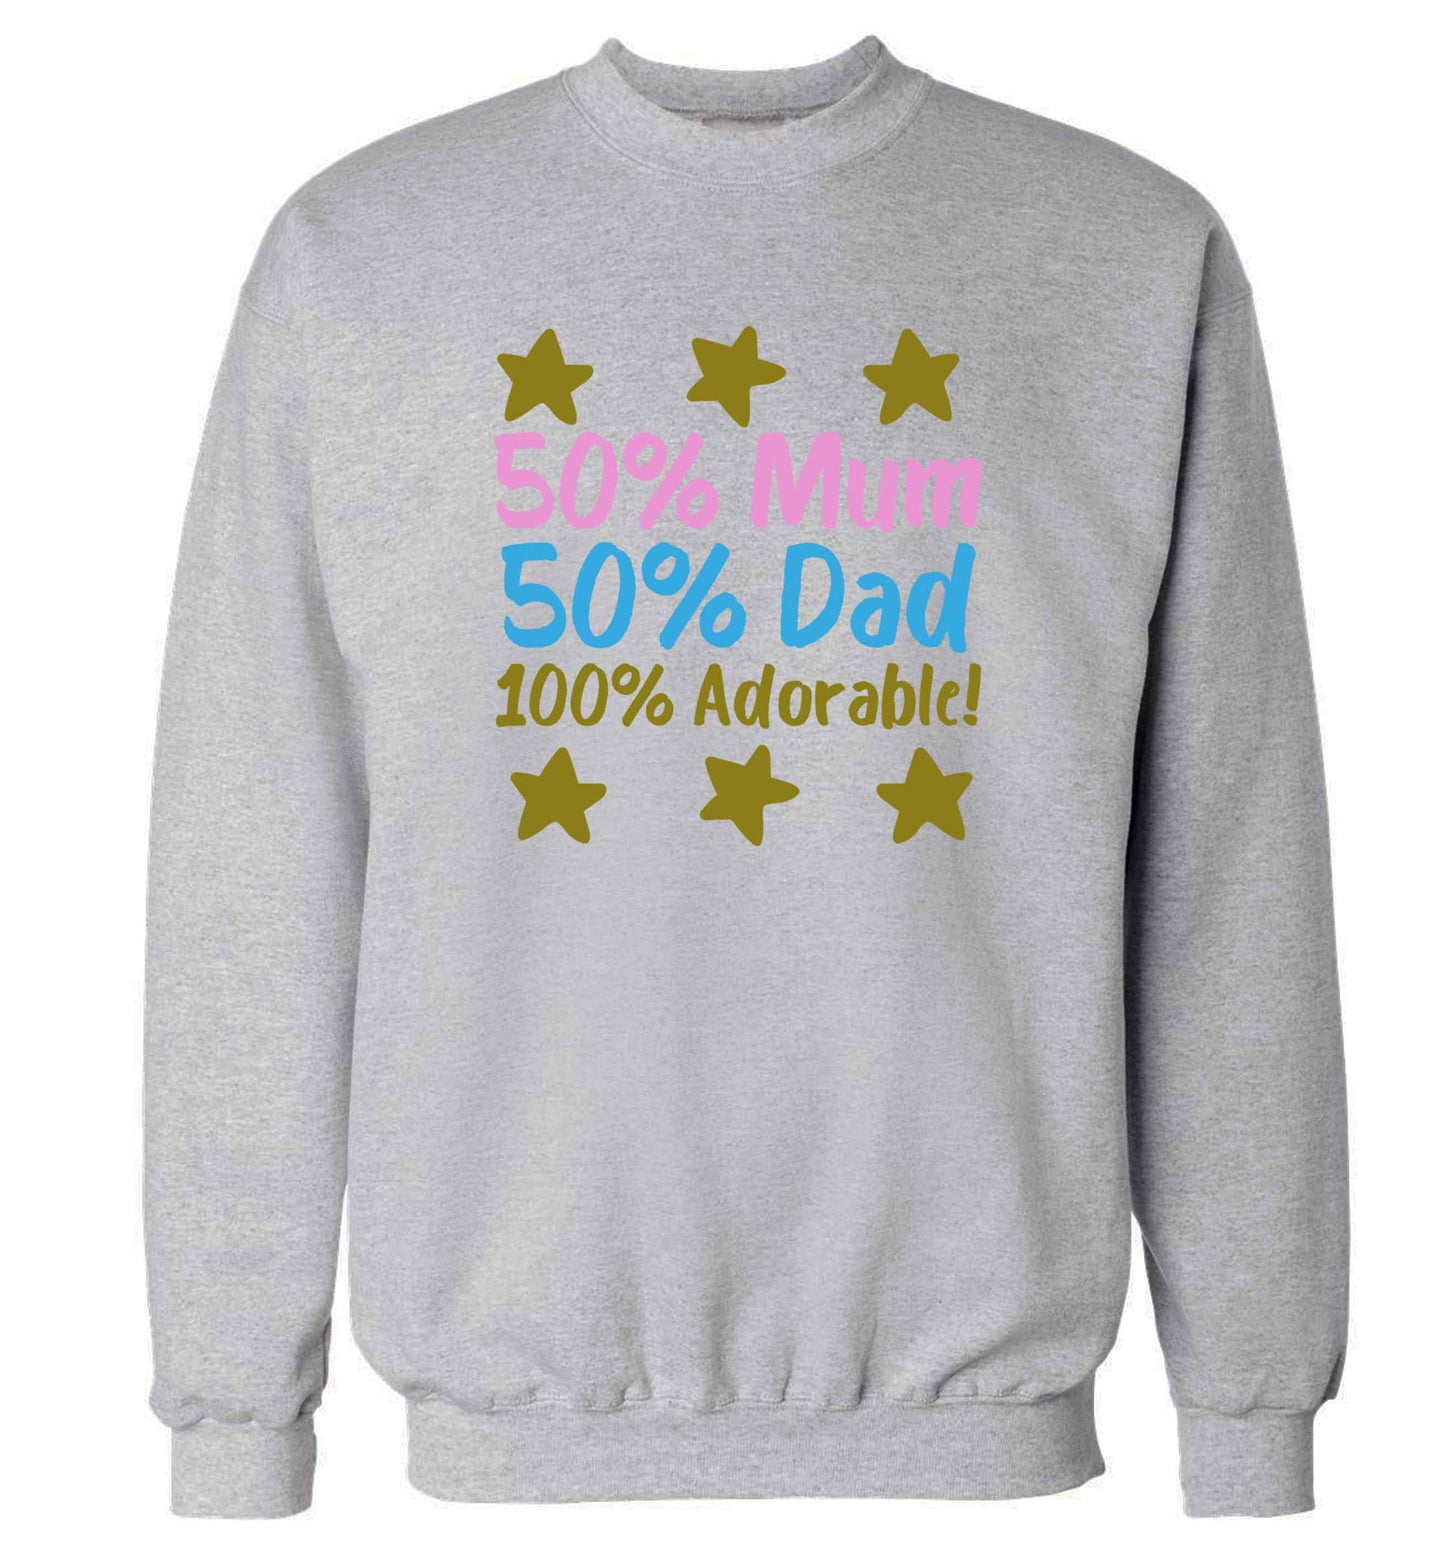 50% mum 50% dad 100% adorable adult's unisex grey sweater 2XL